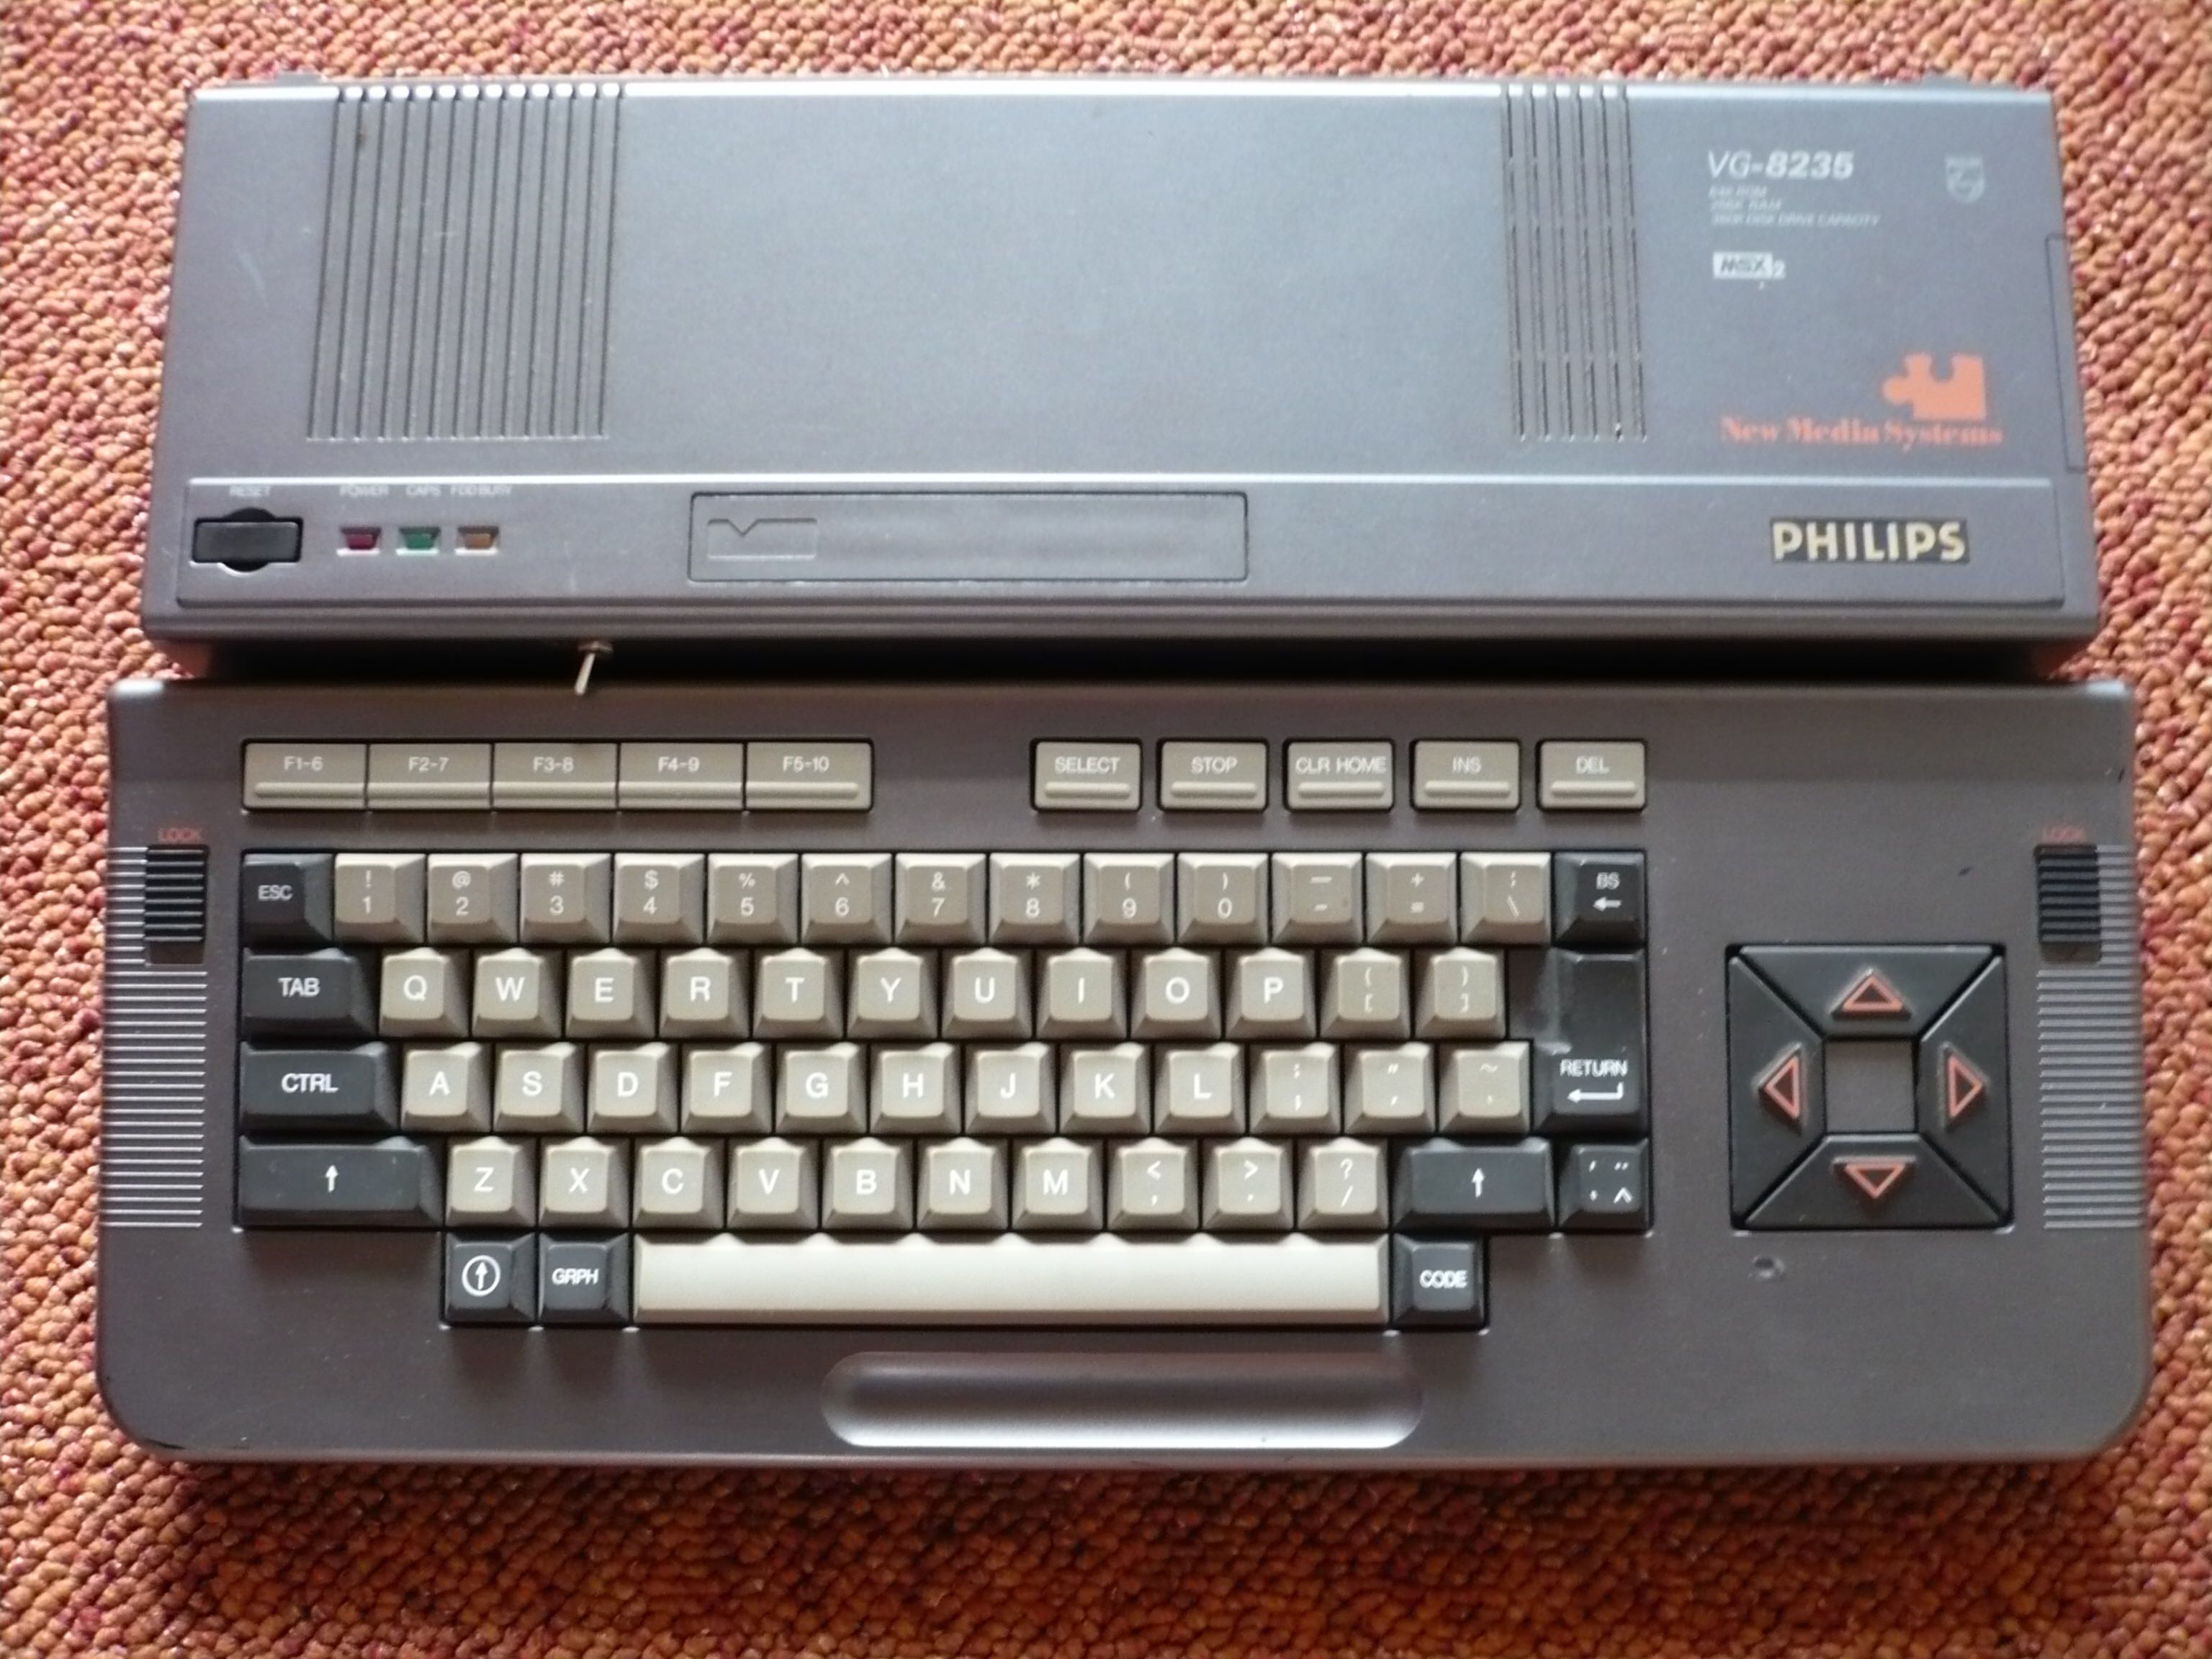 Philips VG-8235